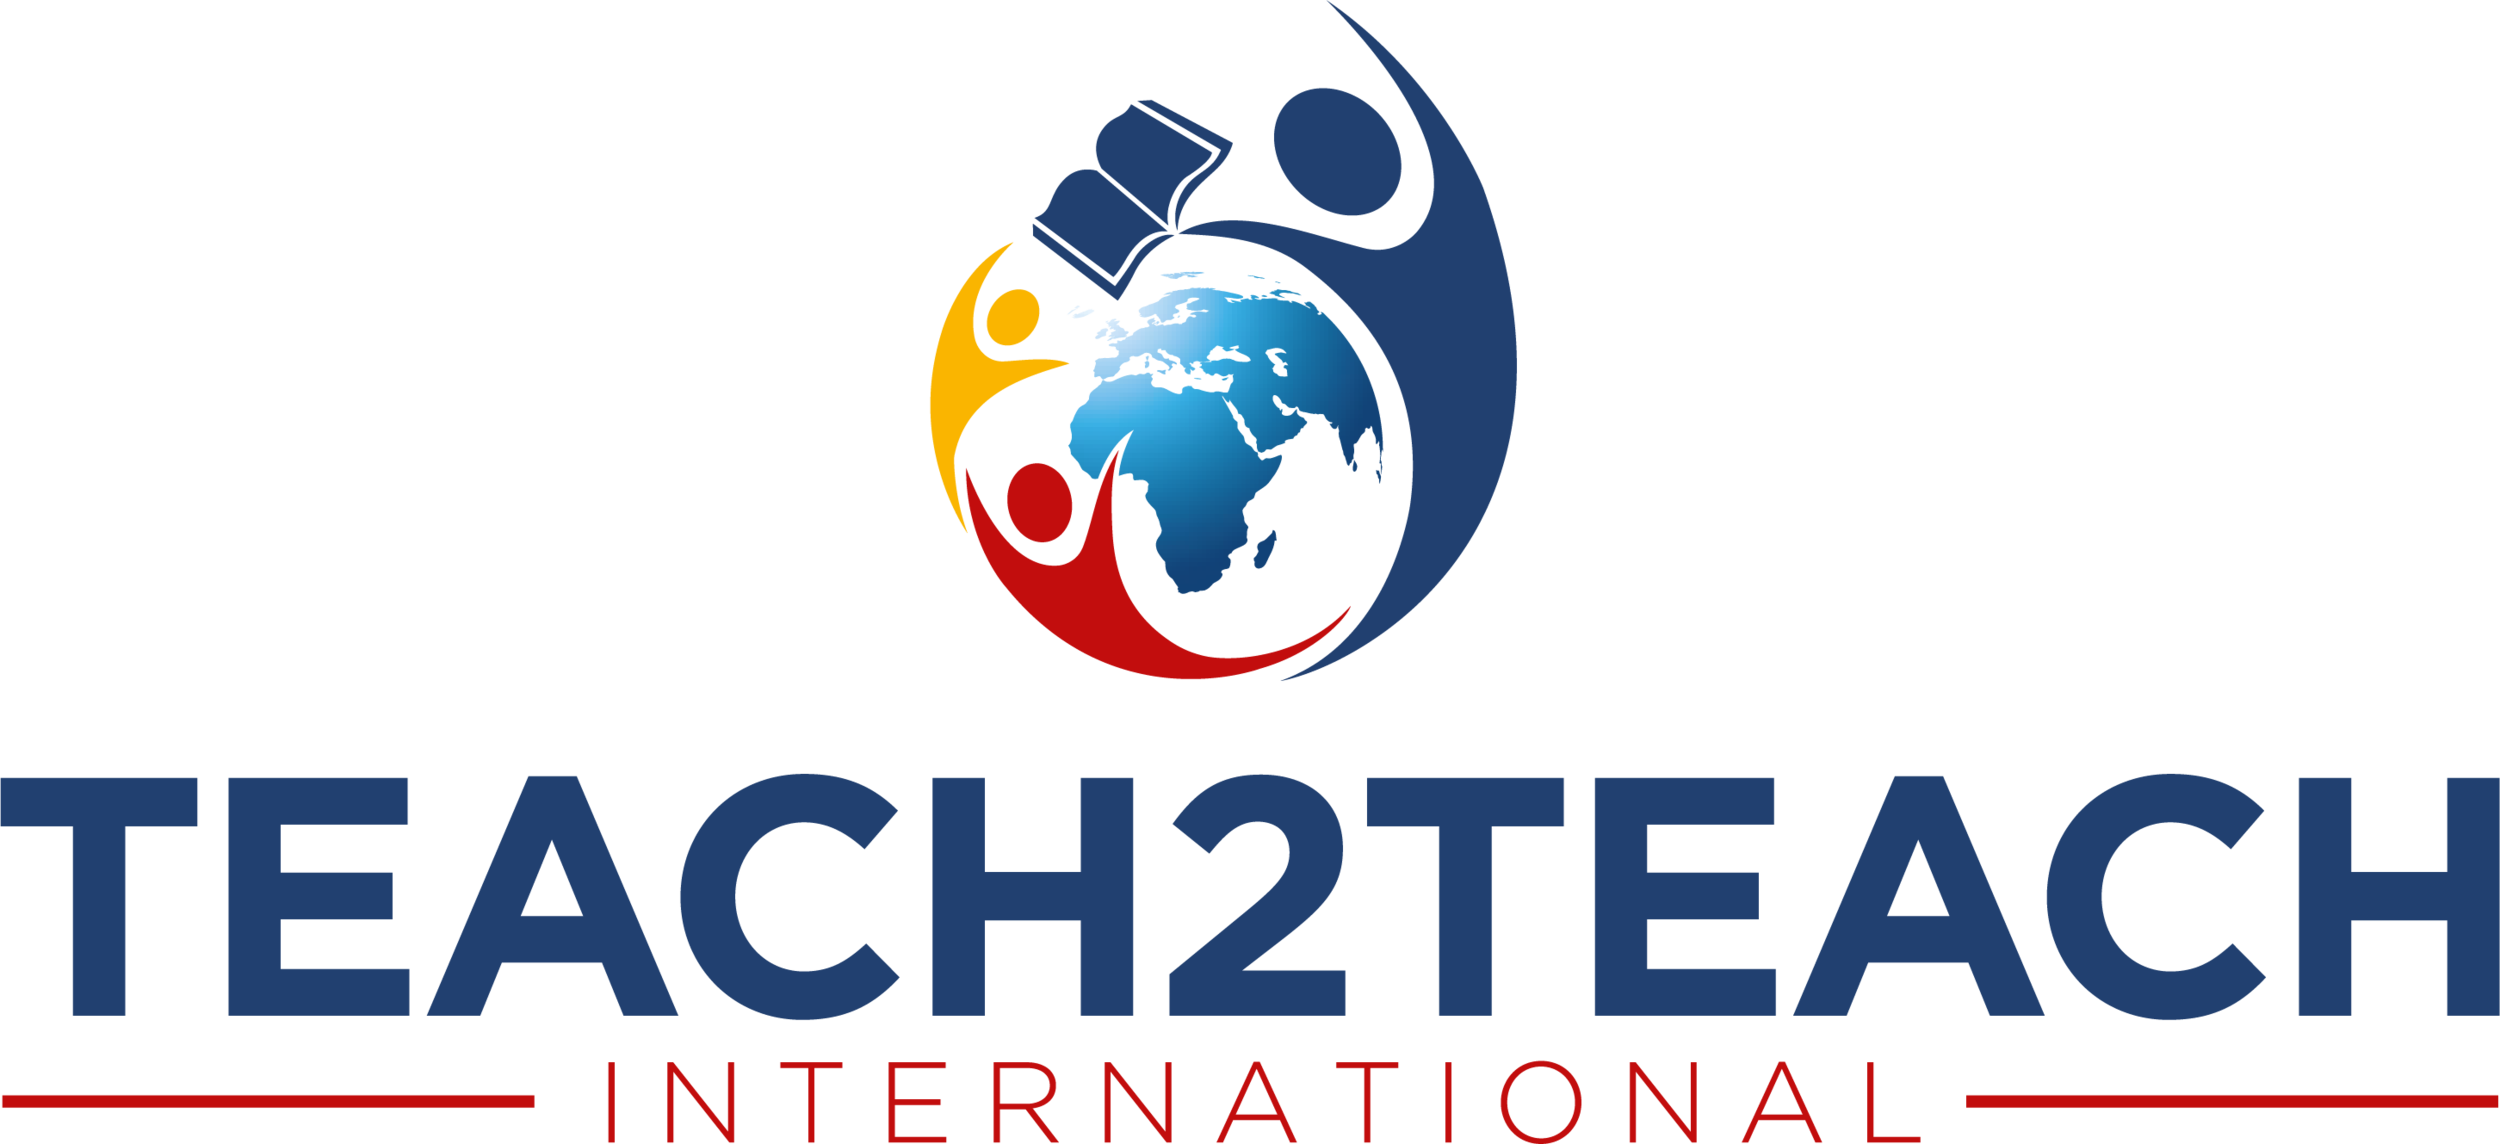 Teach2Teach International